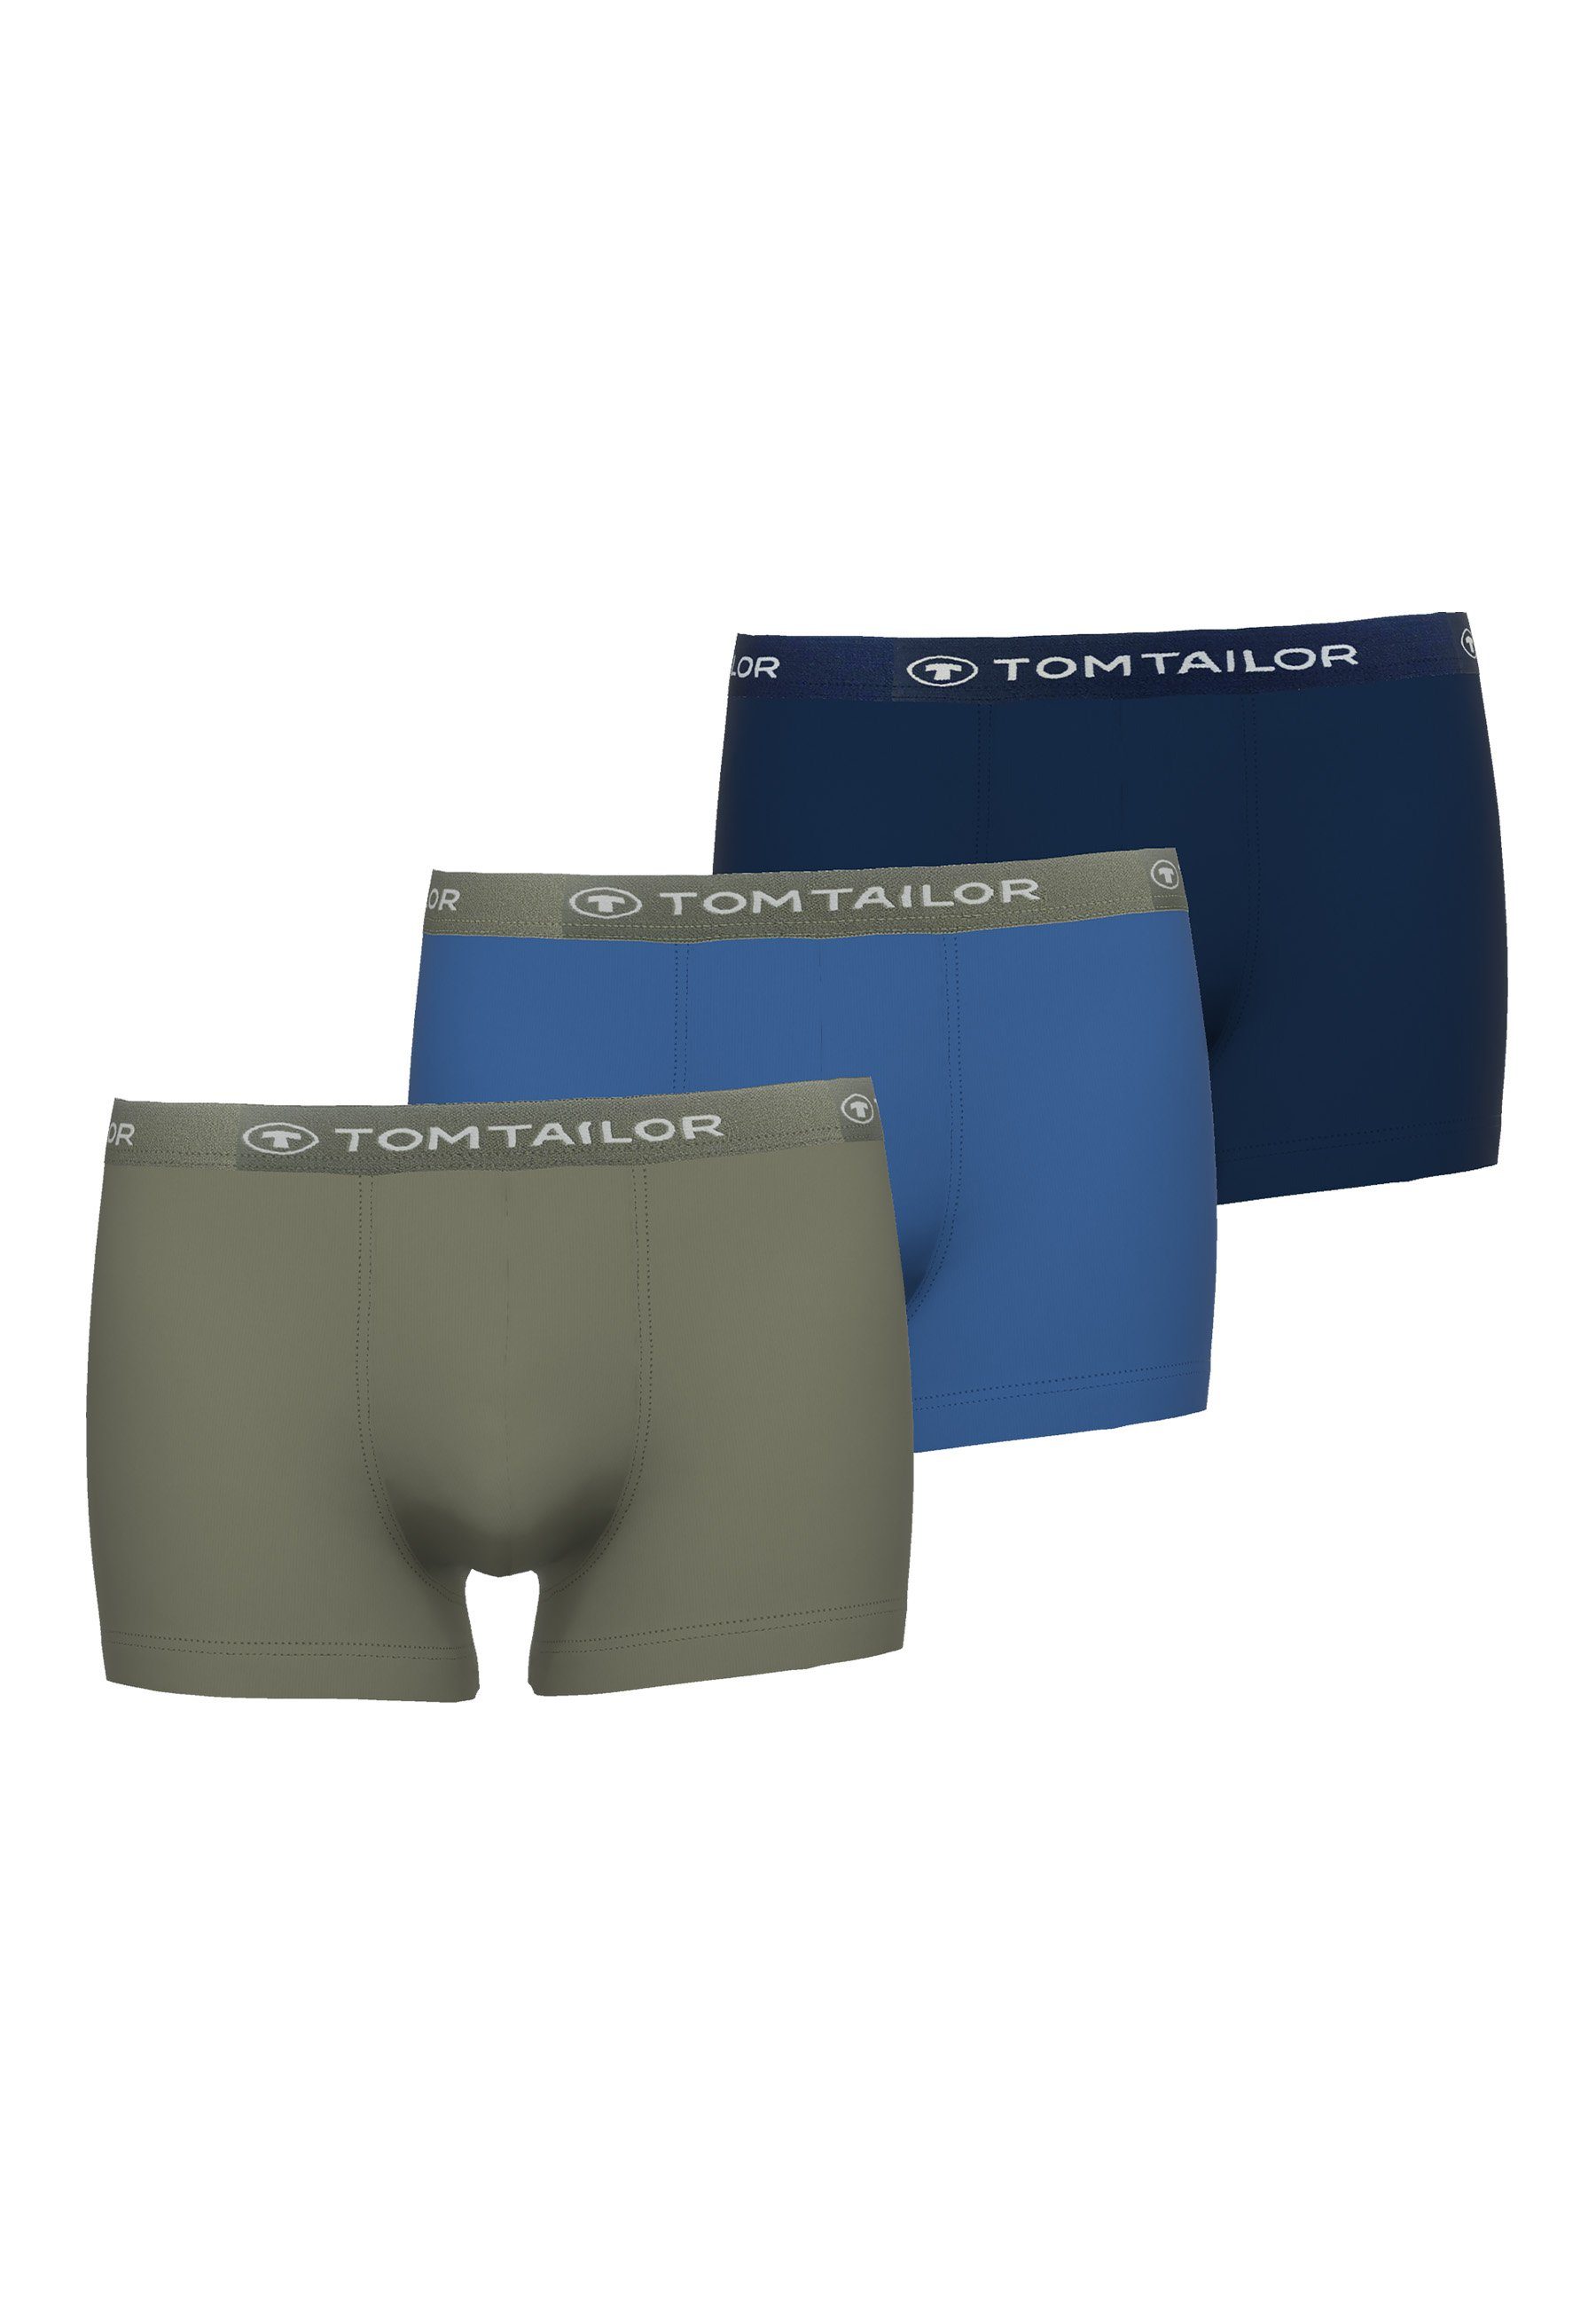 TOM TAILOR Boxershorts TOM TAILOR Herren Pants blau uni 3er Pack (3-St) blau-mittel-multicolor1